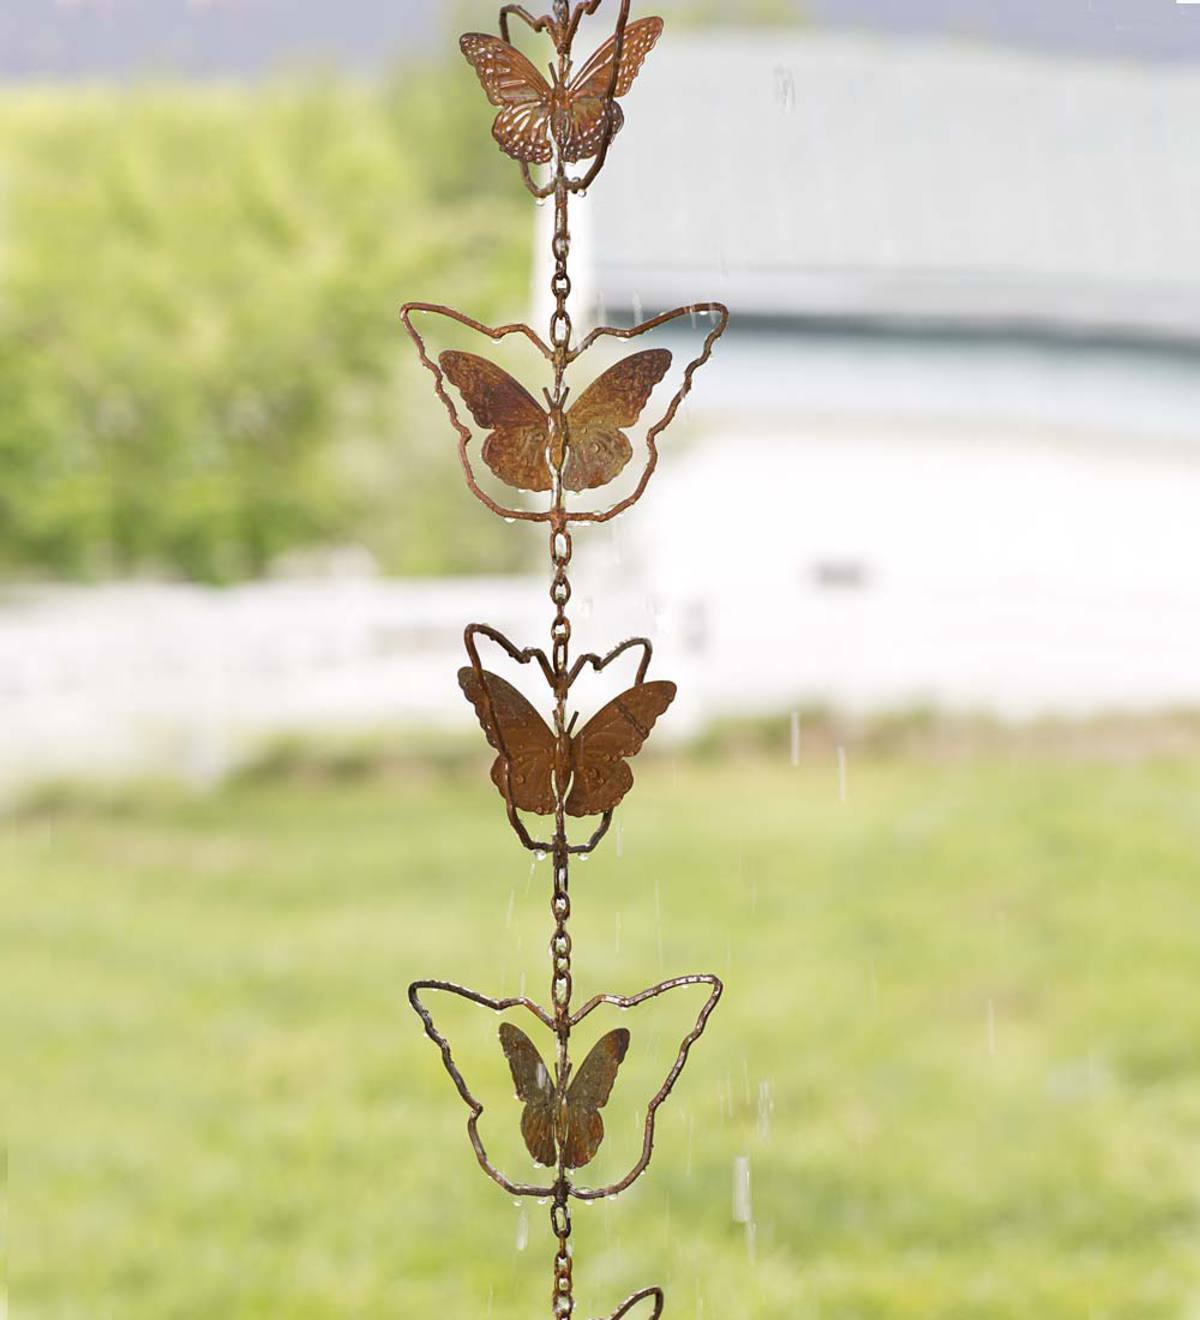 Tfro & Cile Butterfly Rain Chain Gutter Downspout Substitution Decorative Garden Rainwater Diverter Home Decor 8.5 Feet Length 